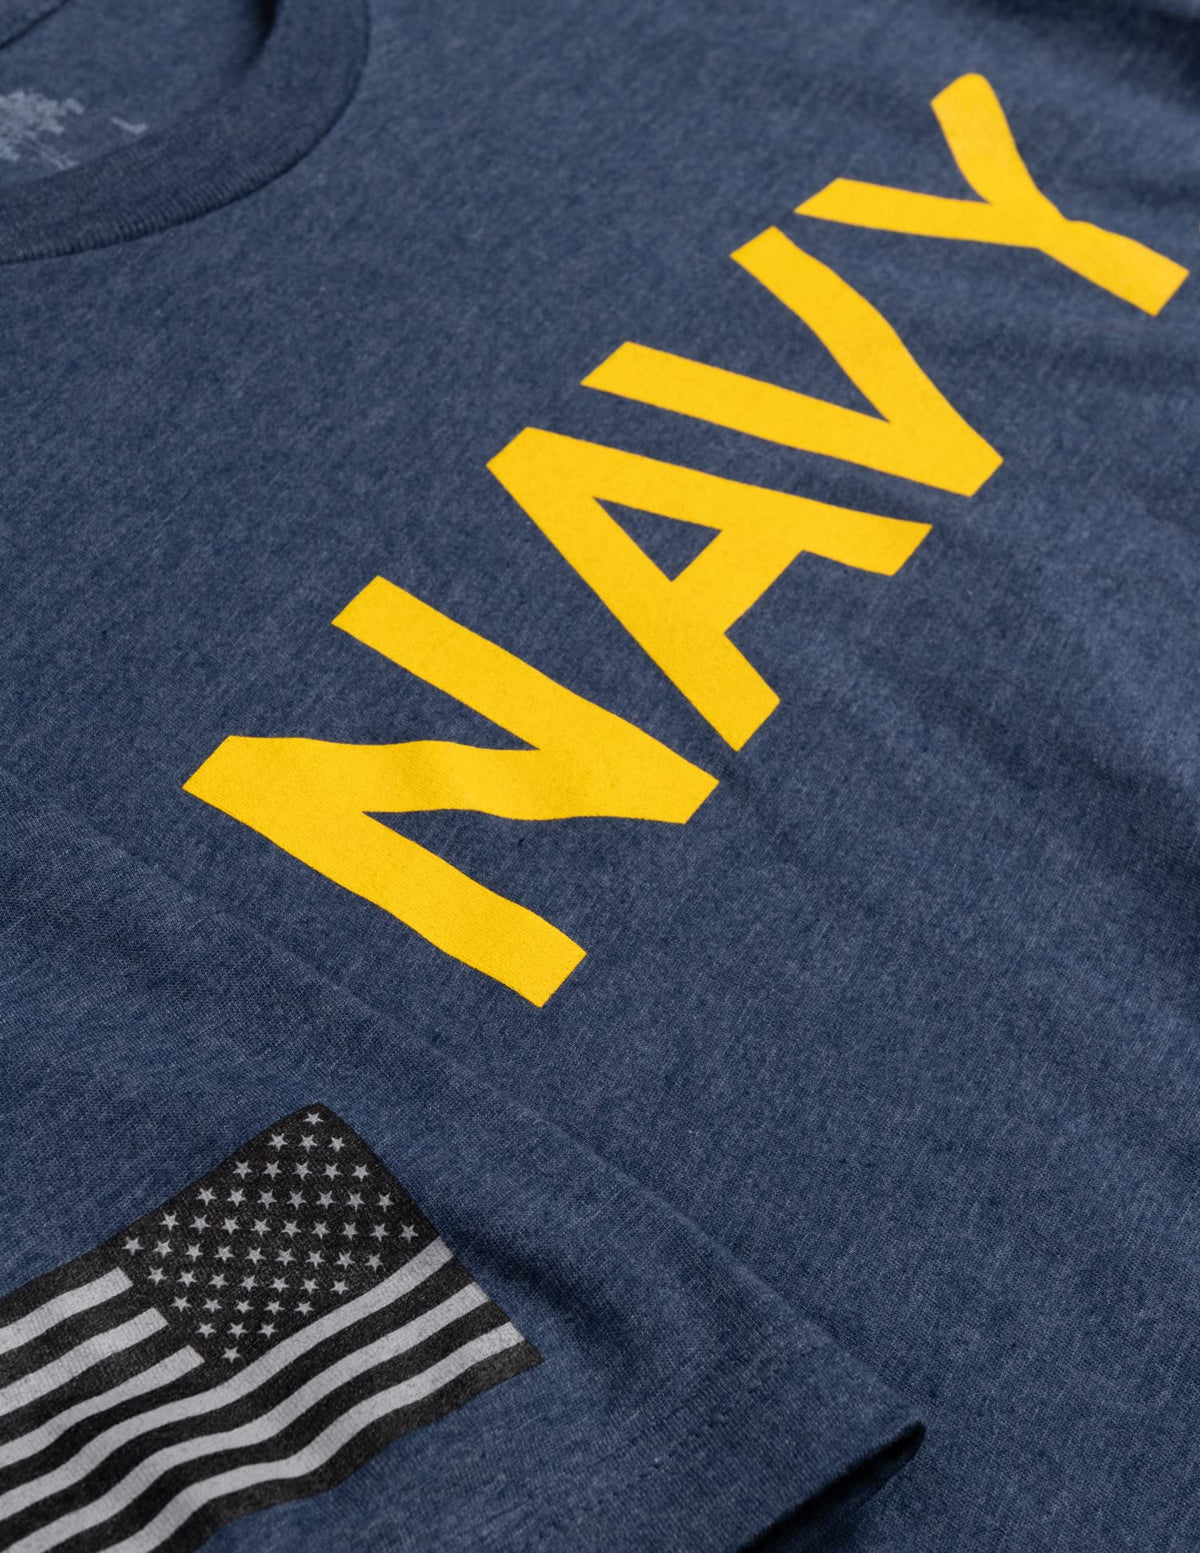 USS Chafee, DDG-90 | U.S. Navy Sailor Veteran USN United States Naval T-shirt for Men Women